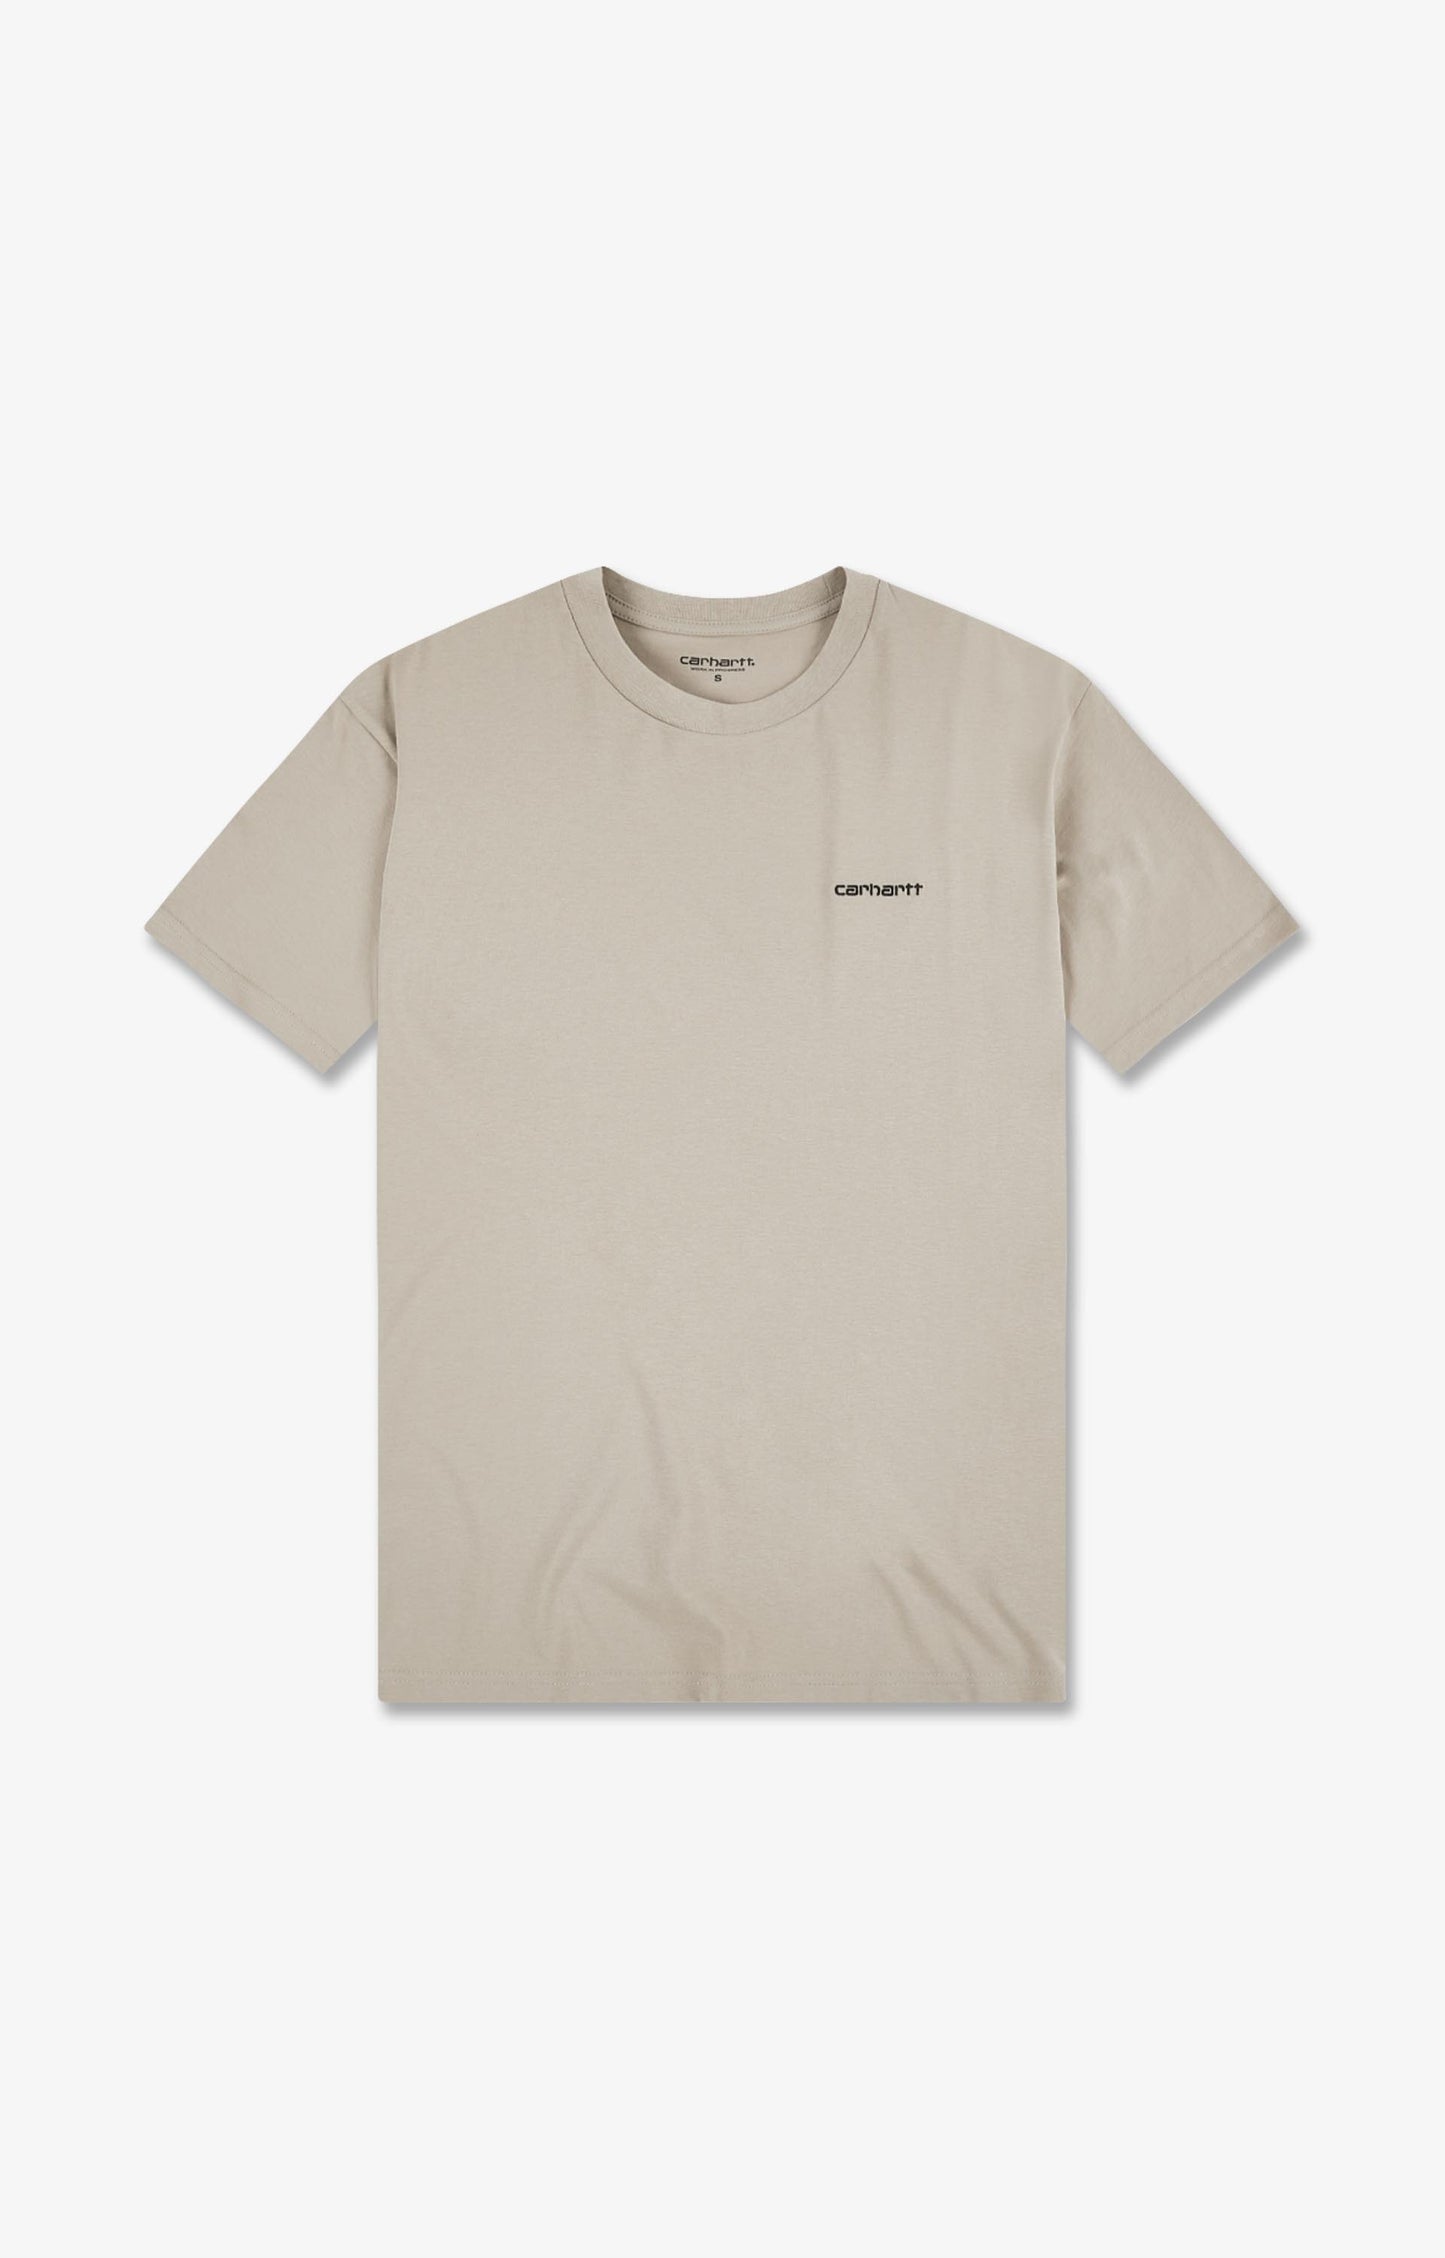 Carhartt WIP Embroidery Script T-Shirt, Cream